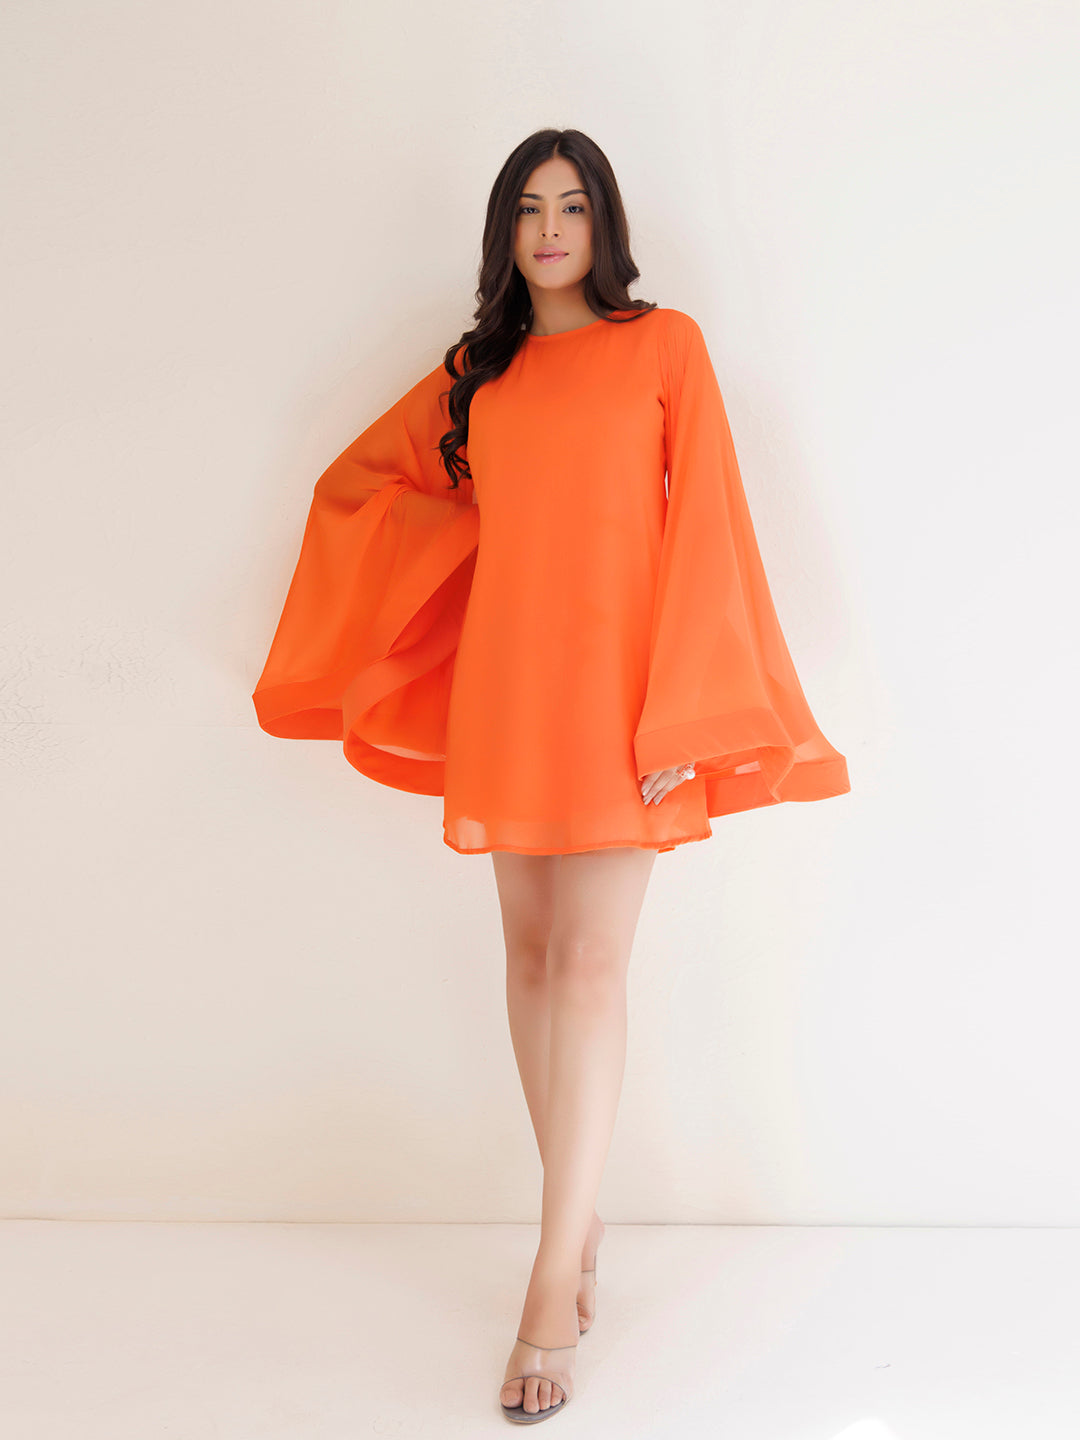 Flame Orange Chiffon Dress by ragavi